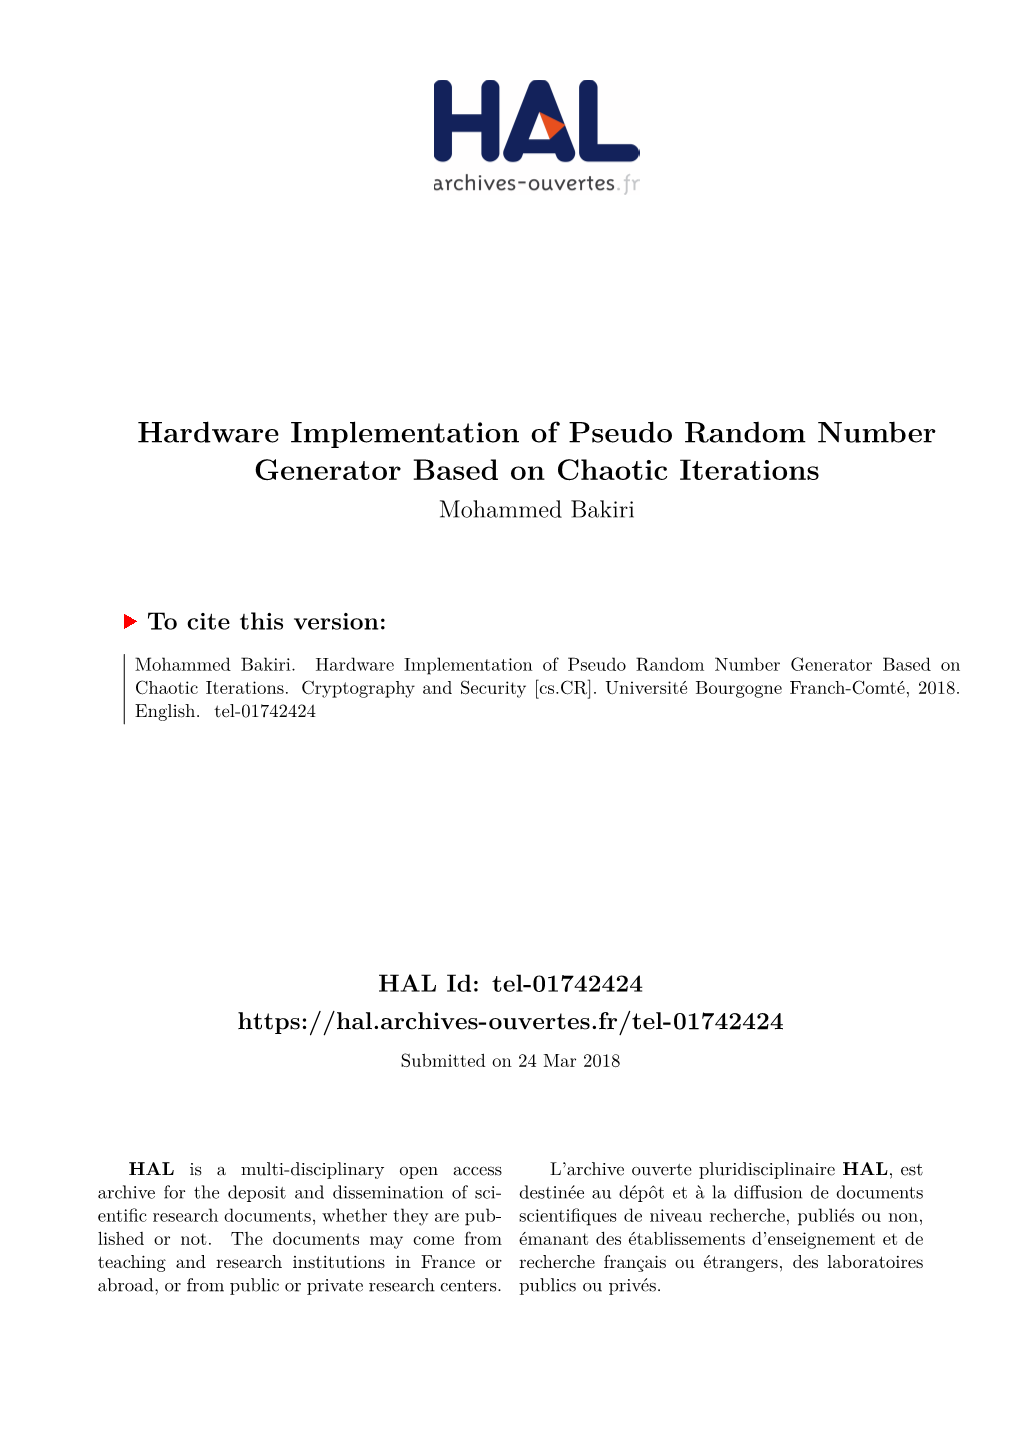 Hardware Implementation of Pseudo Random Number Generator Based on Chaotic Iterations Mohammed Bakiri